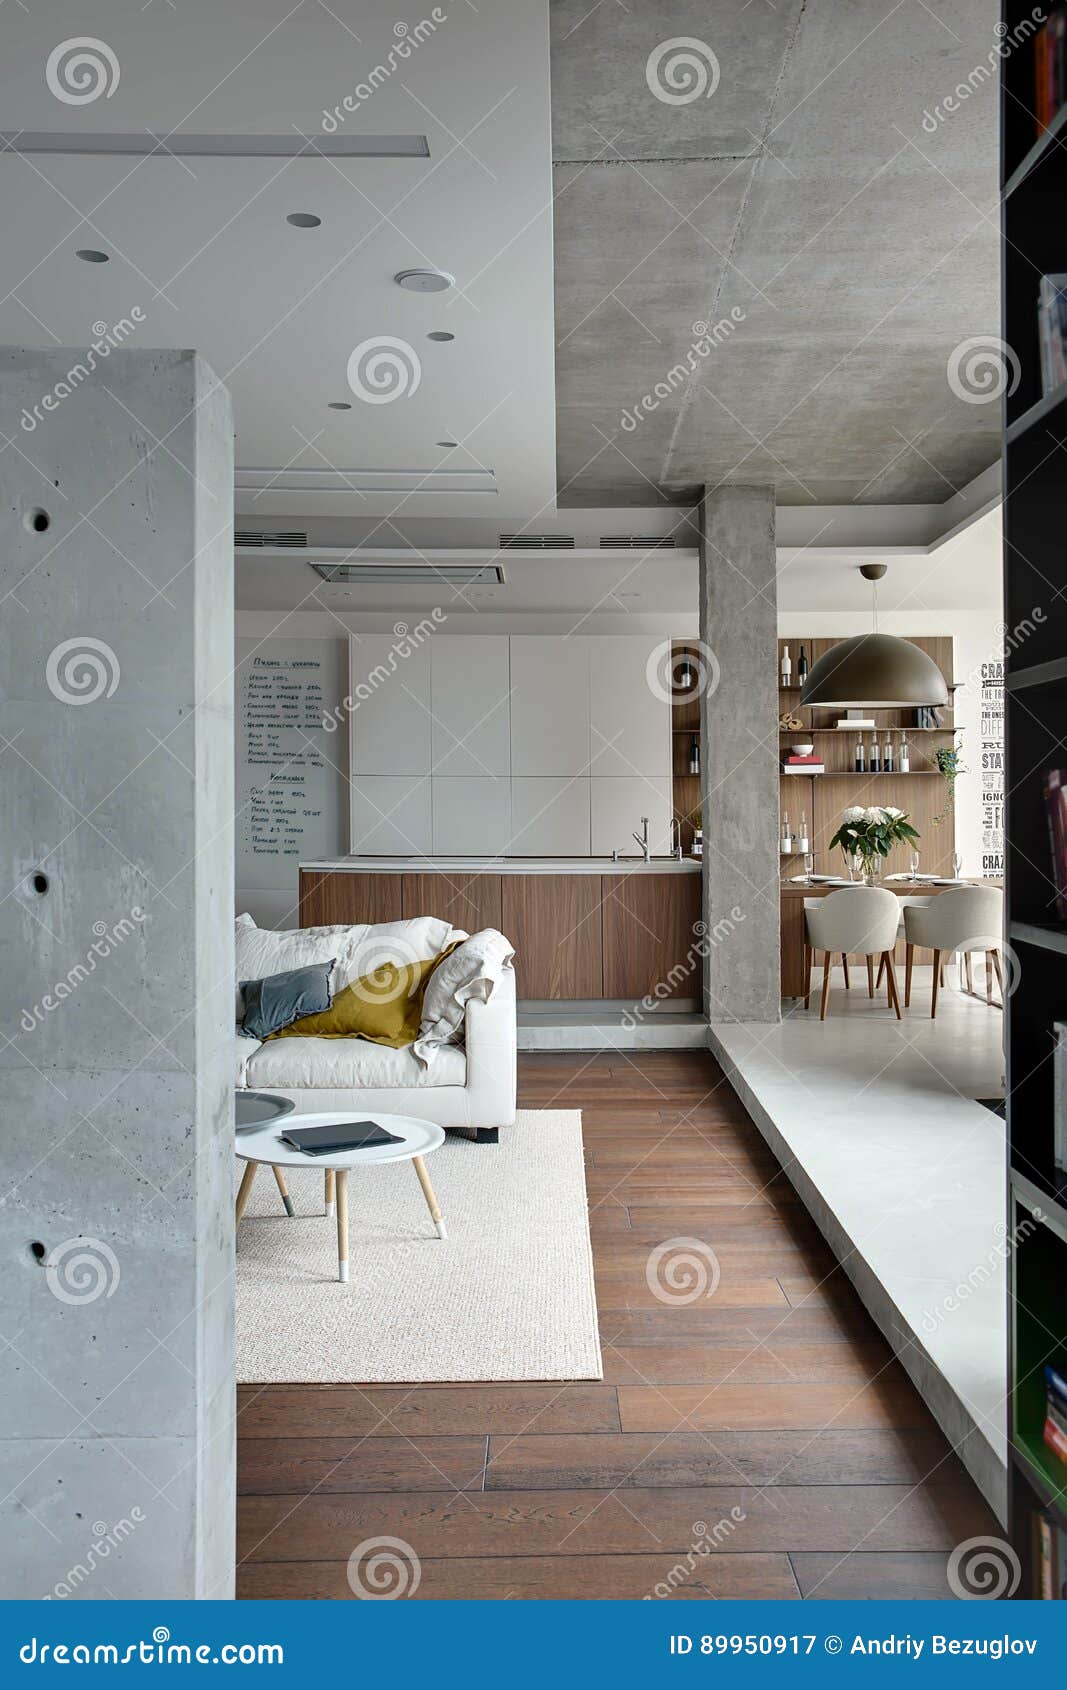 Studio Apartment In Loft Style Stock Image Image Of Fashionable